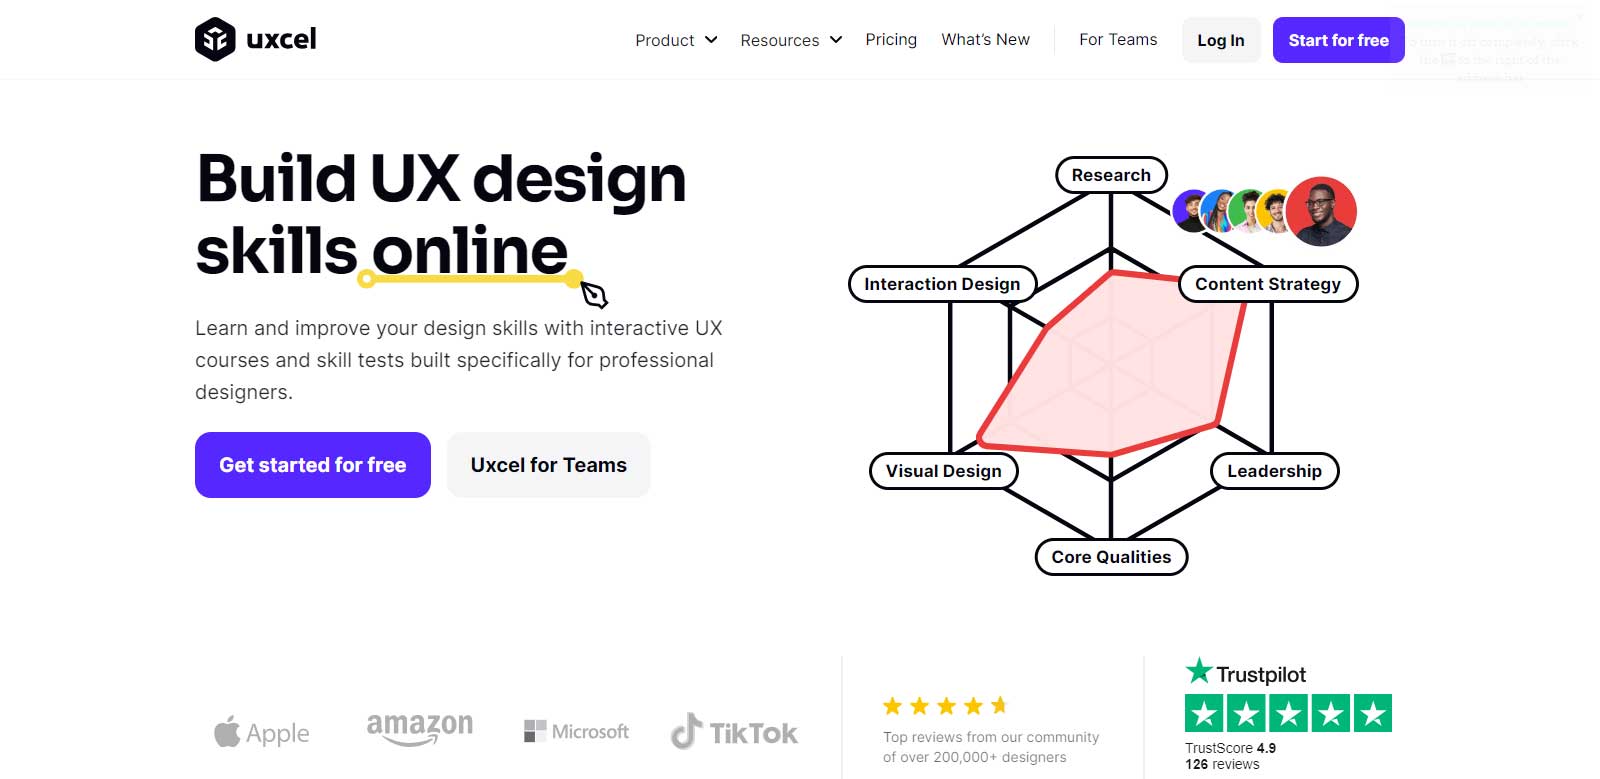 Uxcel – Build Your UX Design Skills Online